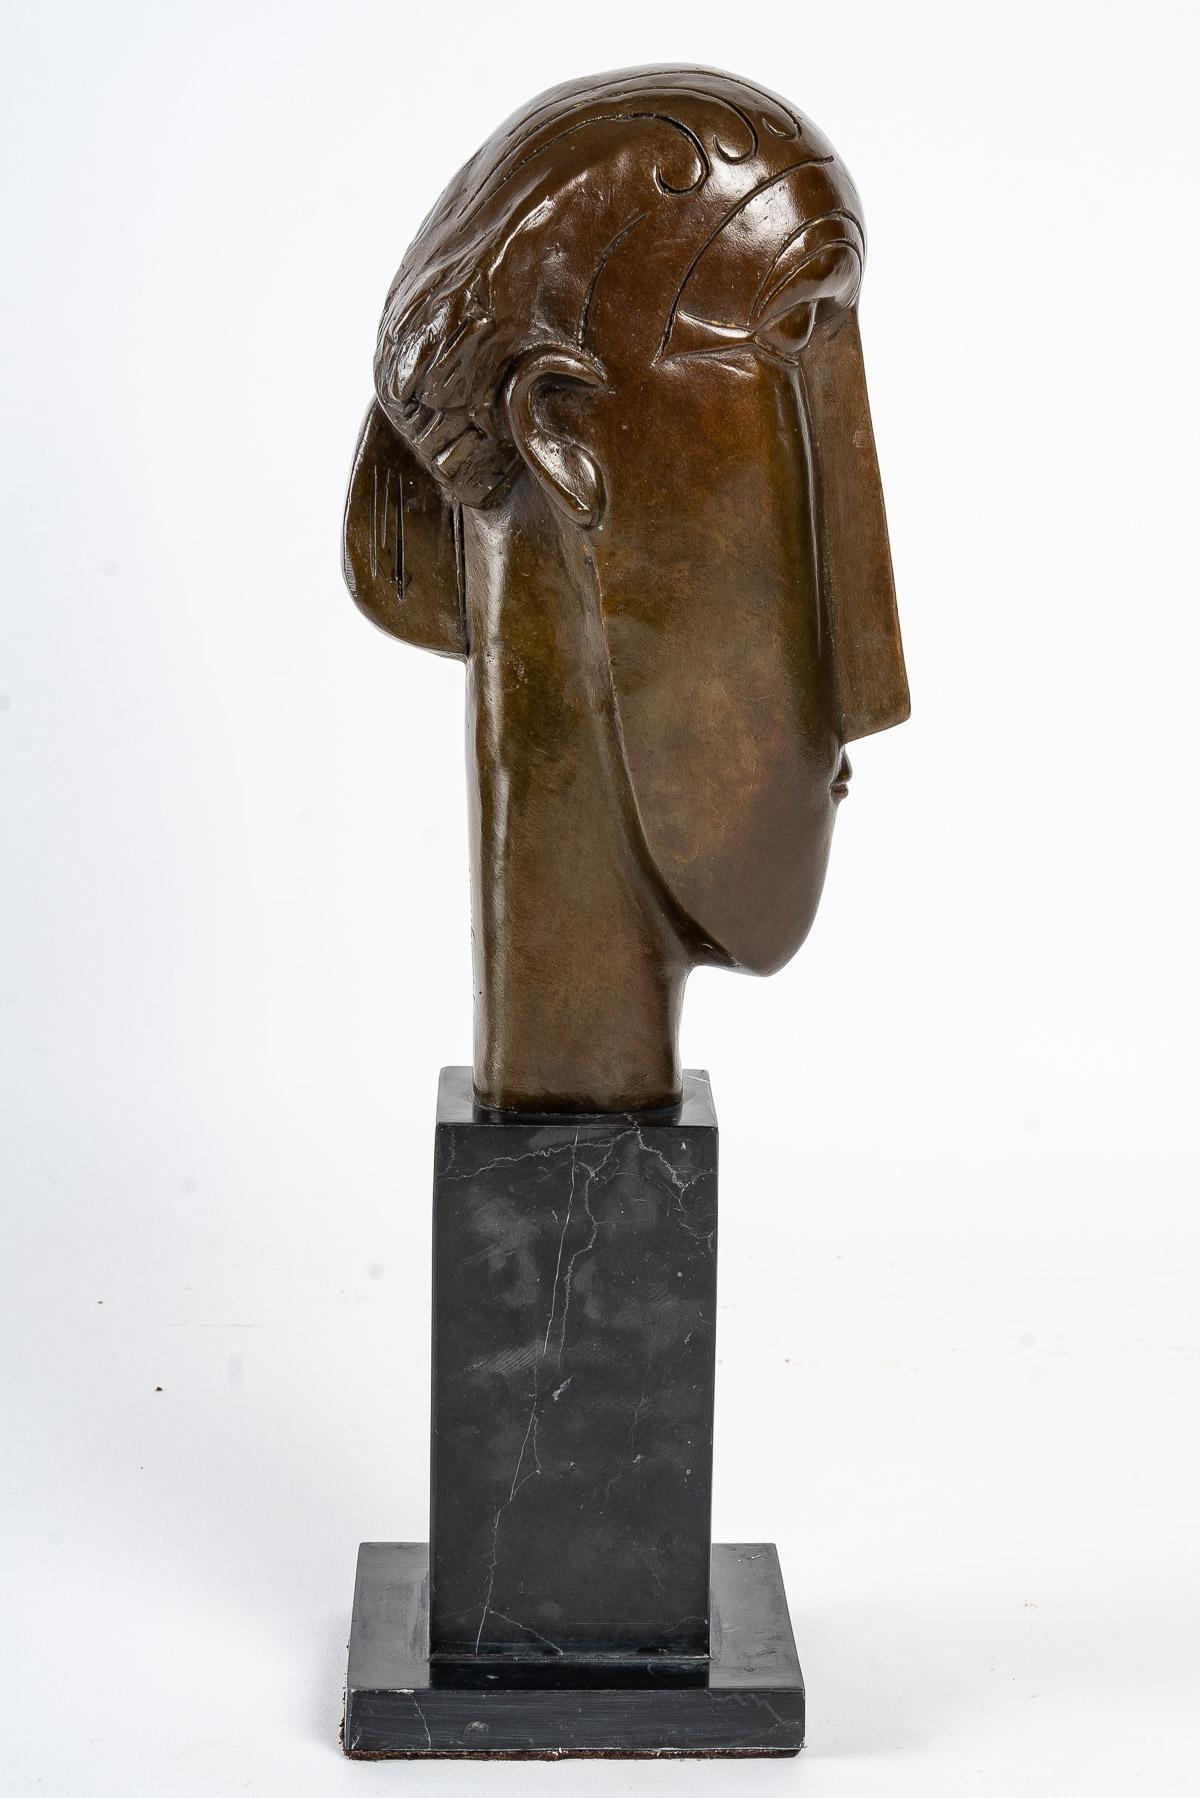 Art Deco Sculpture of a Woman After Modigliani